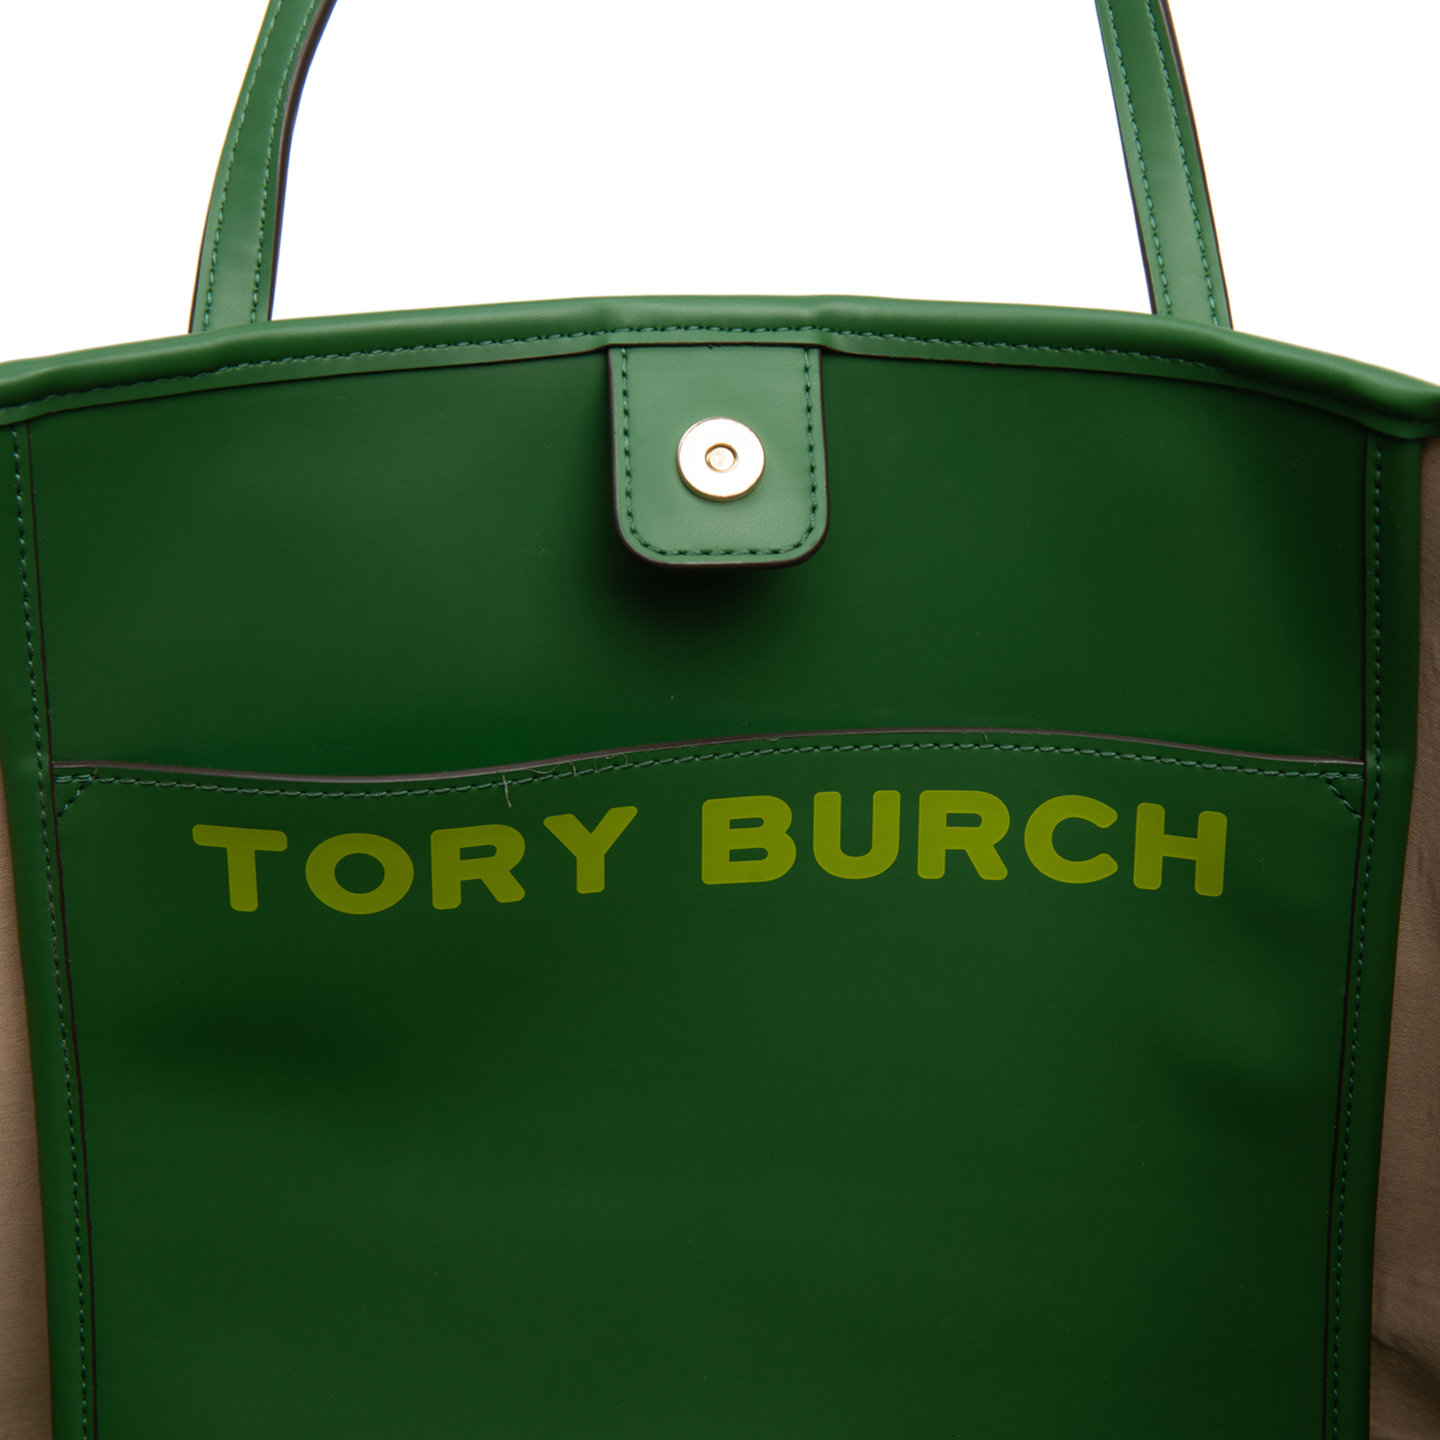 Tory Burch Gemini Link Tote in Green